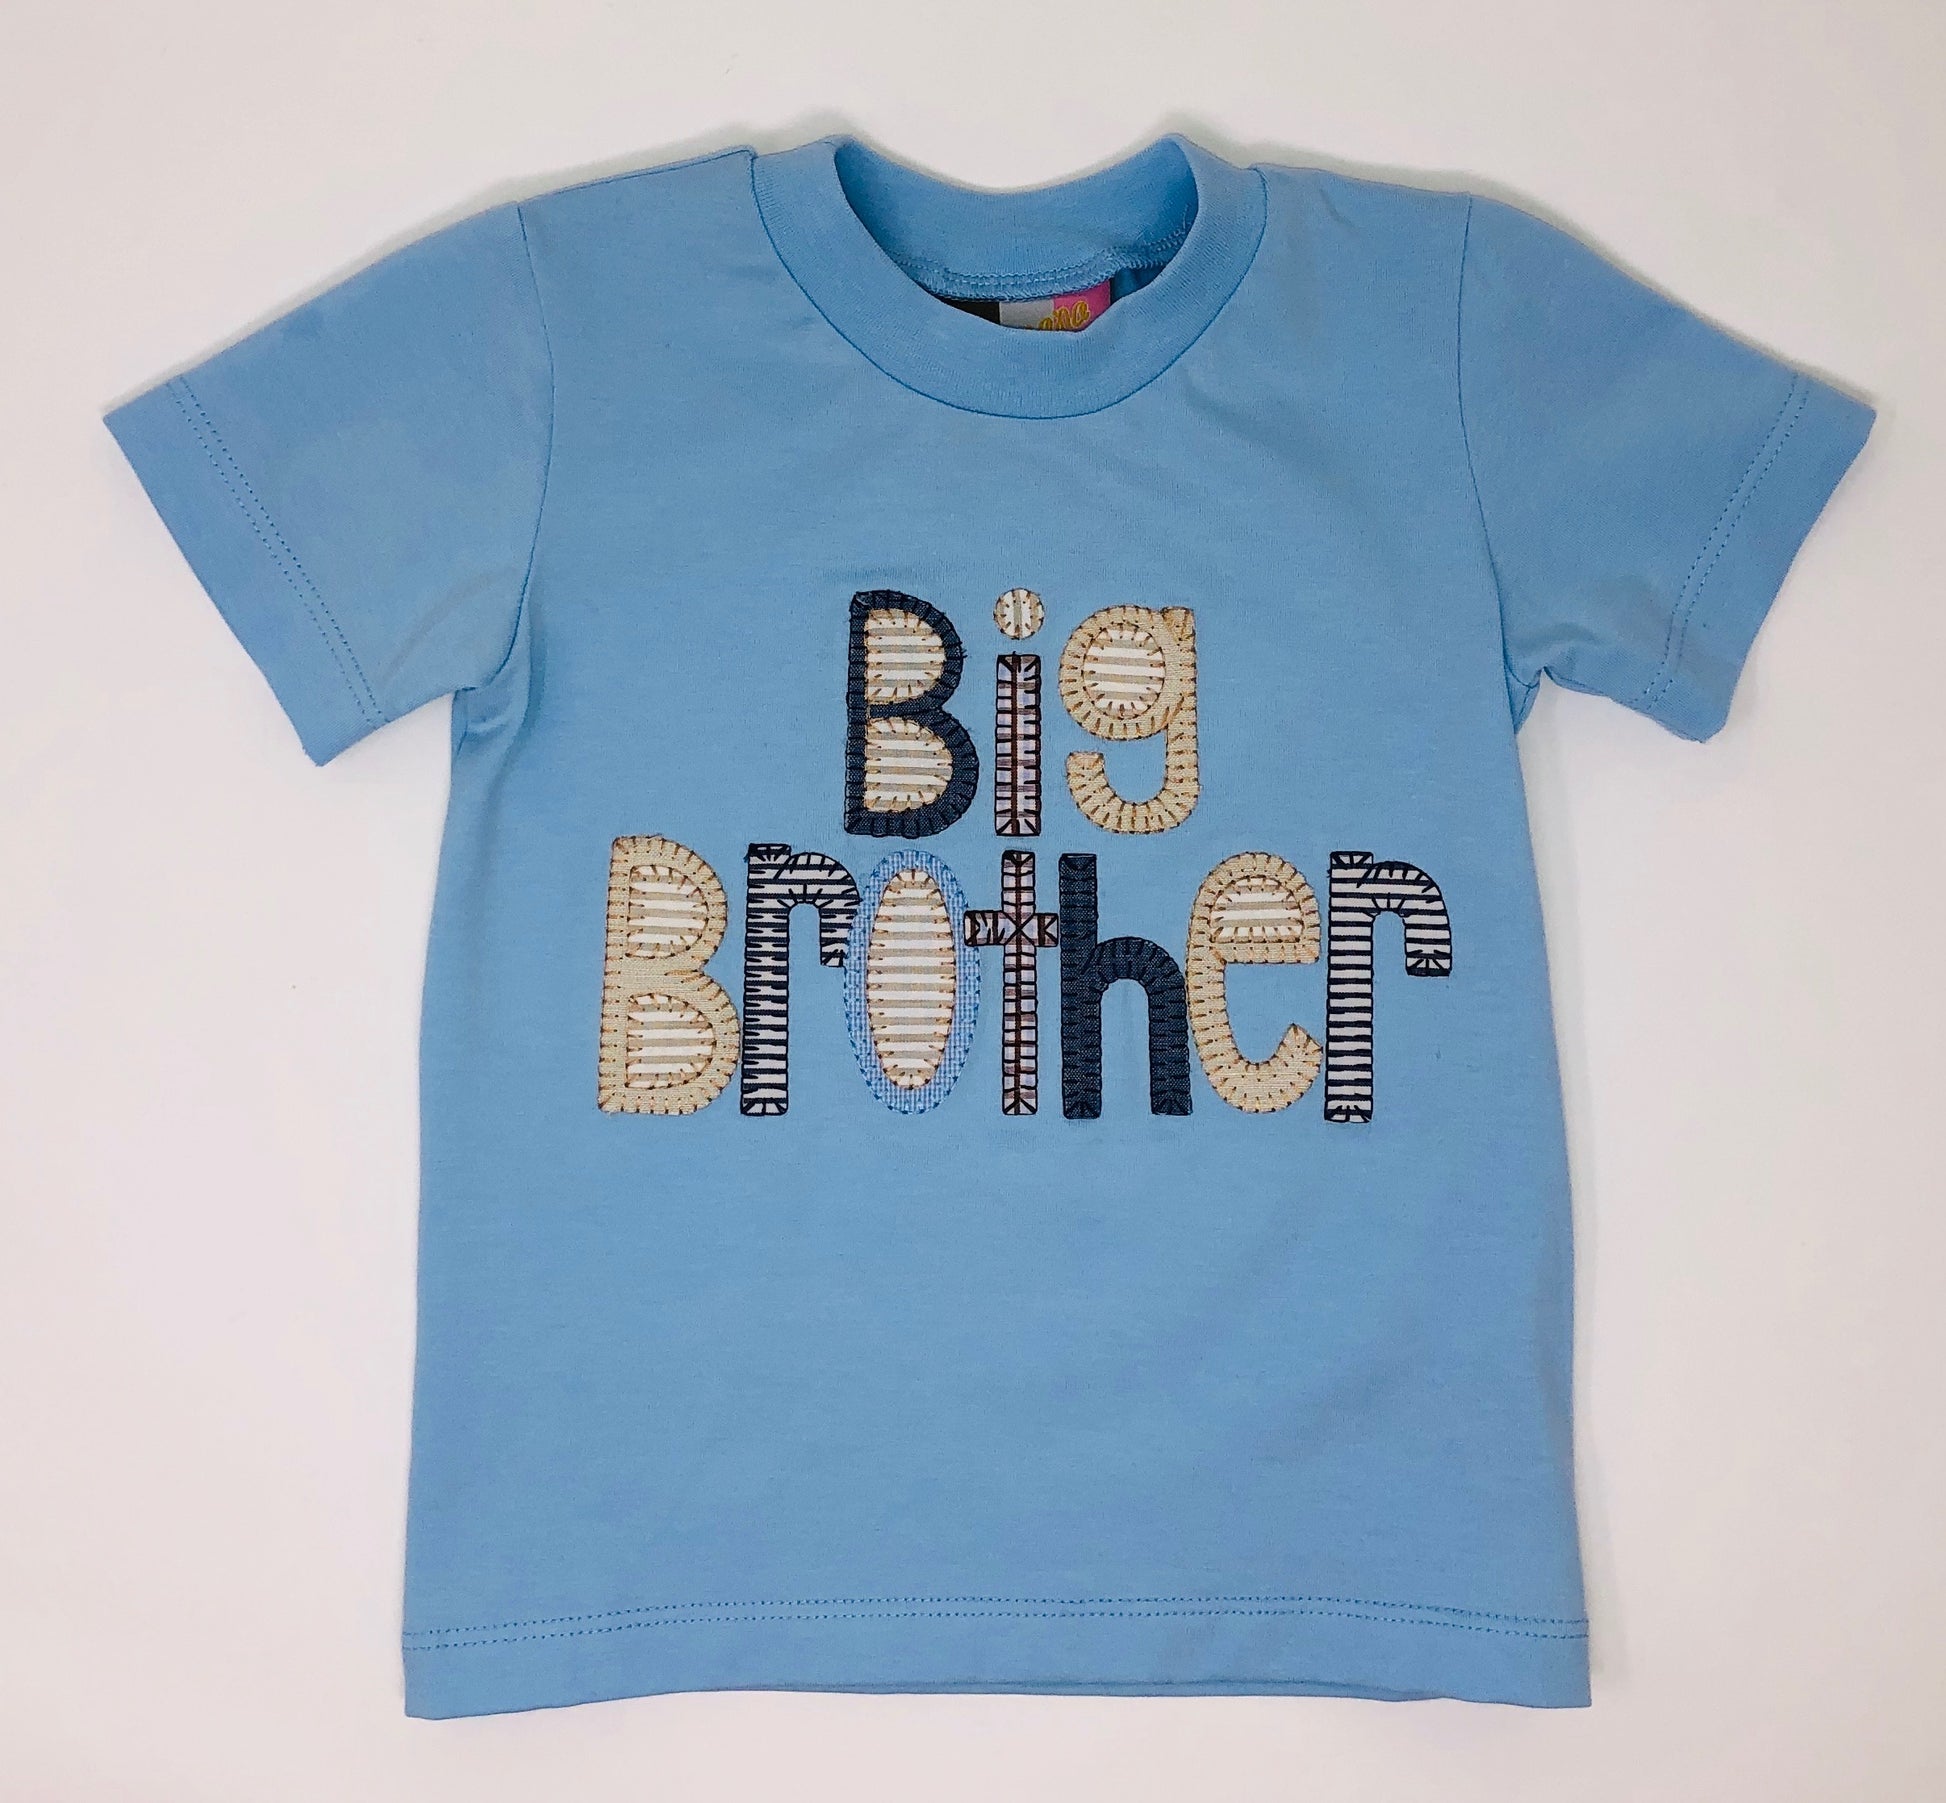 Big Brother Applique T-Shirt Clothing Banana Split   